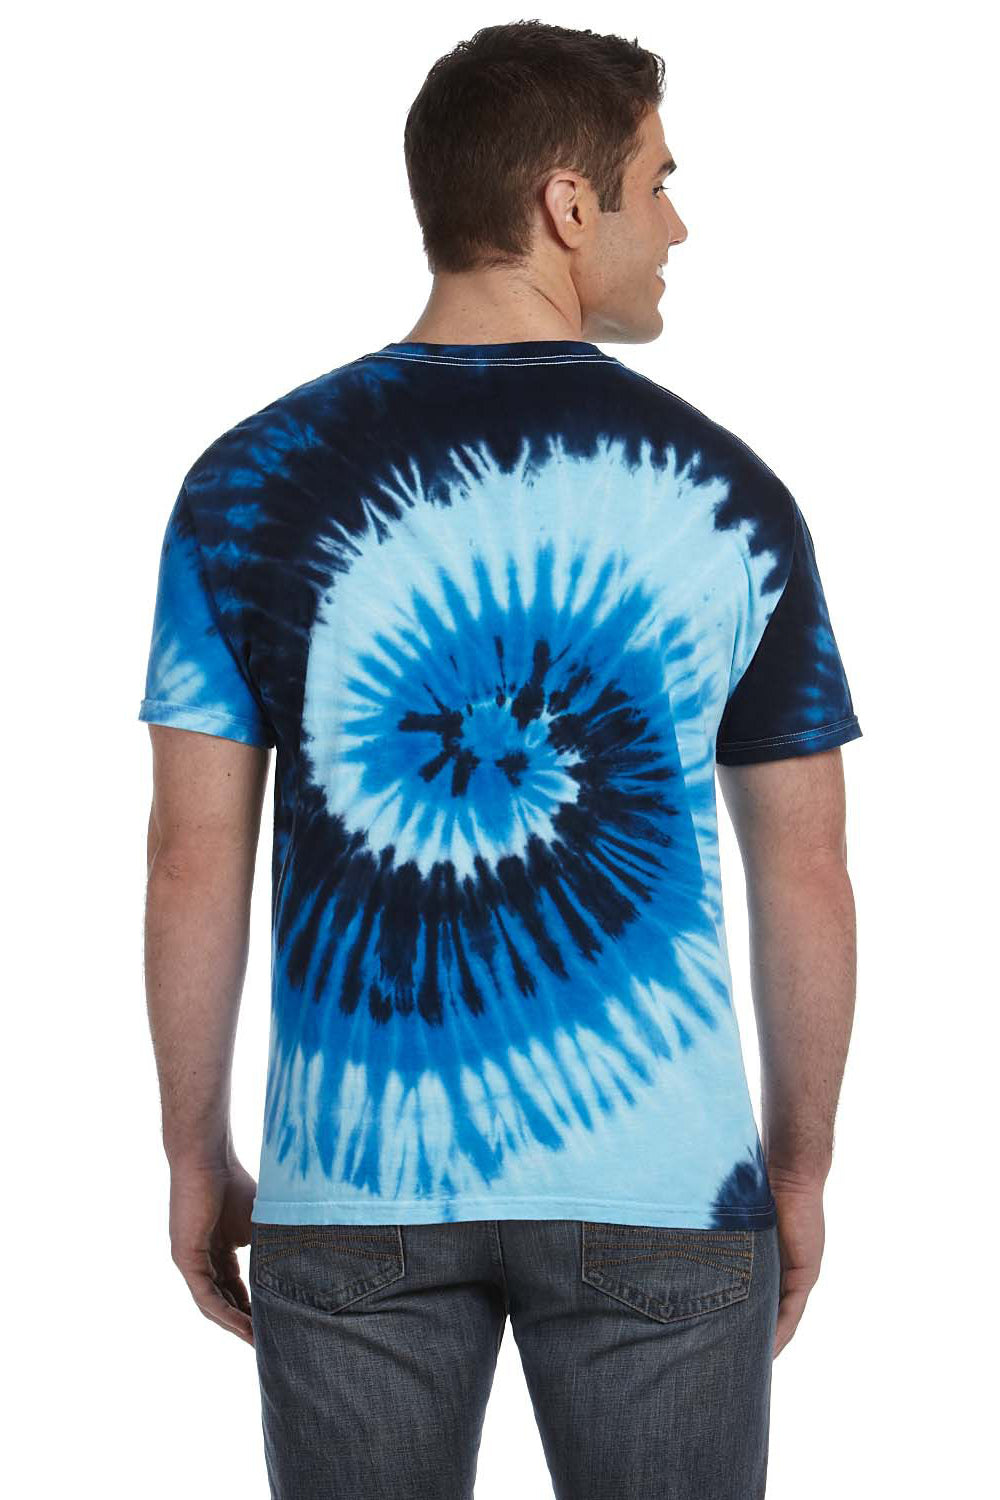 Tie-Dye CD100 Mens Short Sleeve Crewneck T-Shirt Blue Ocean Back